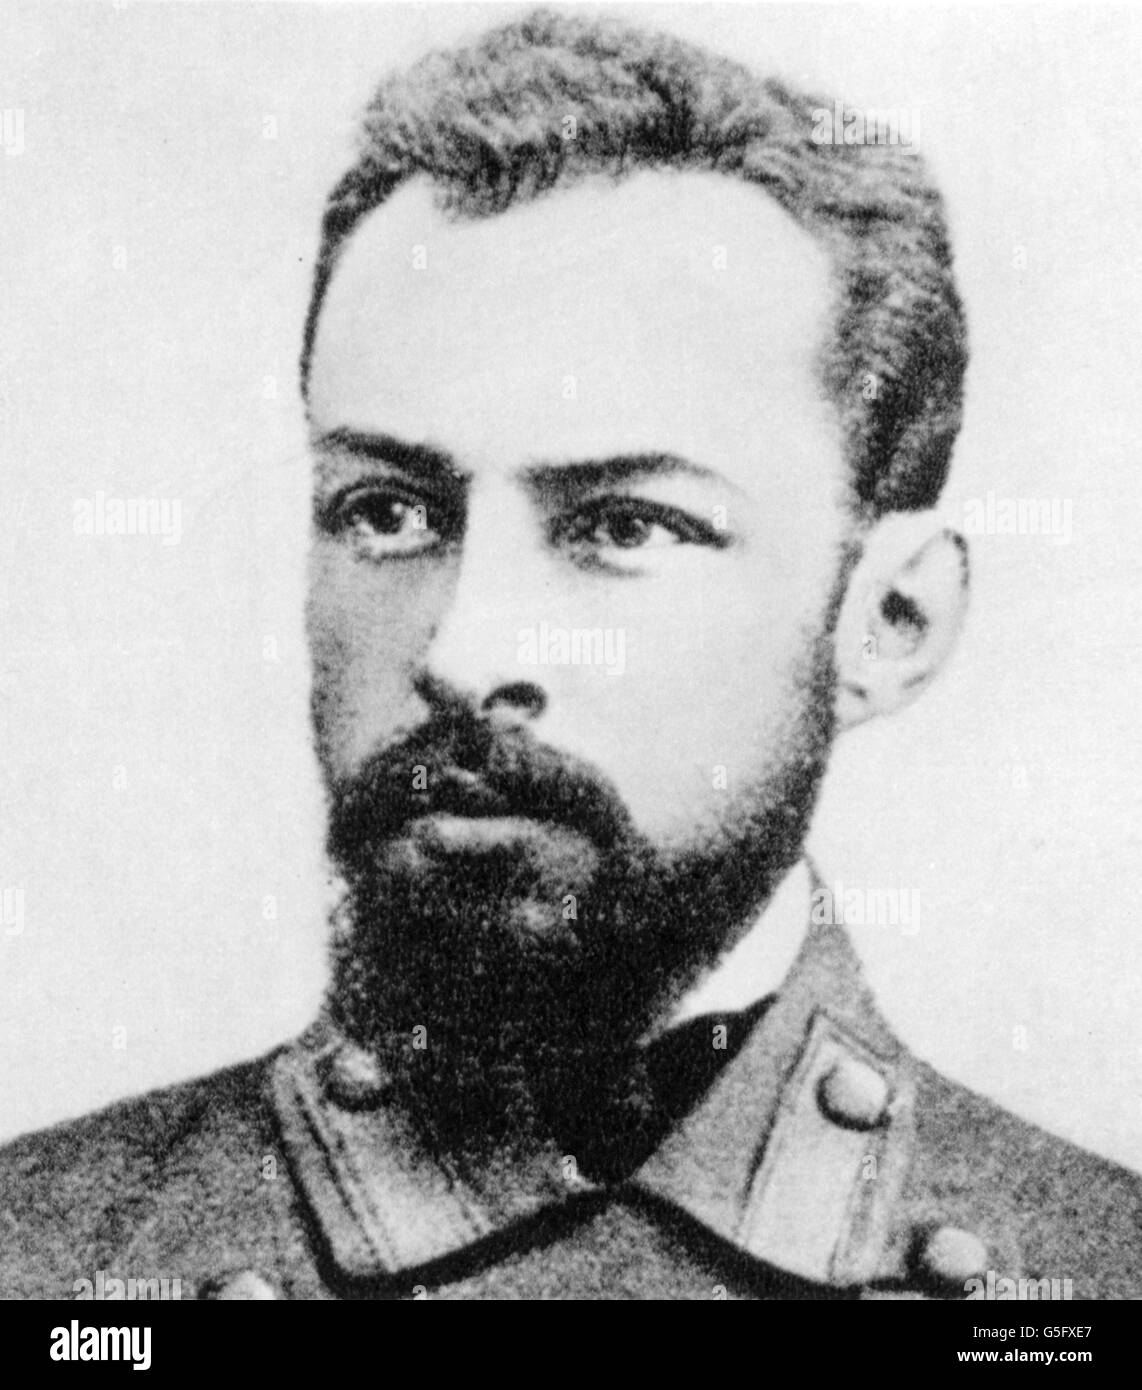 Lenin (Vladimir Ilyich Ulyanov), 22.4.1870 - 21.1.1924, Russian politician, his brother Alexander Ilyich Ulyanov, portrait, circa 1885, Stock Photo